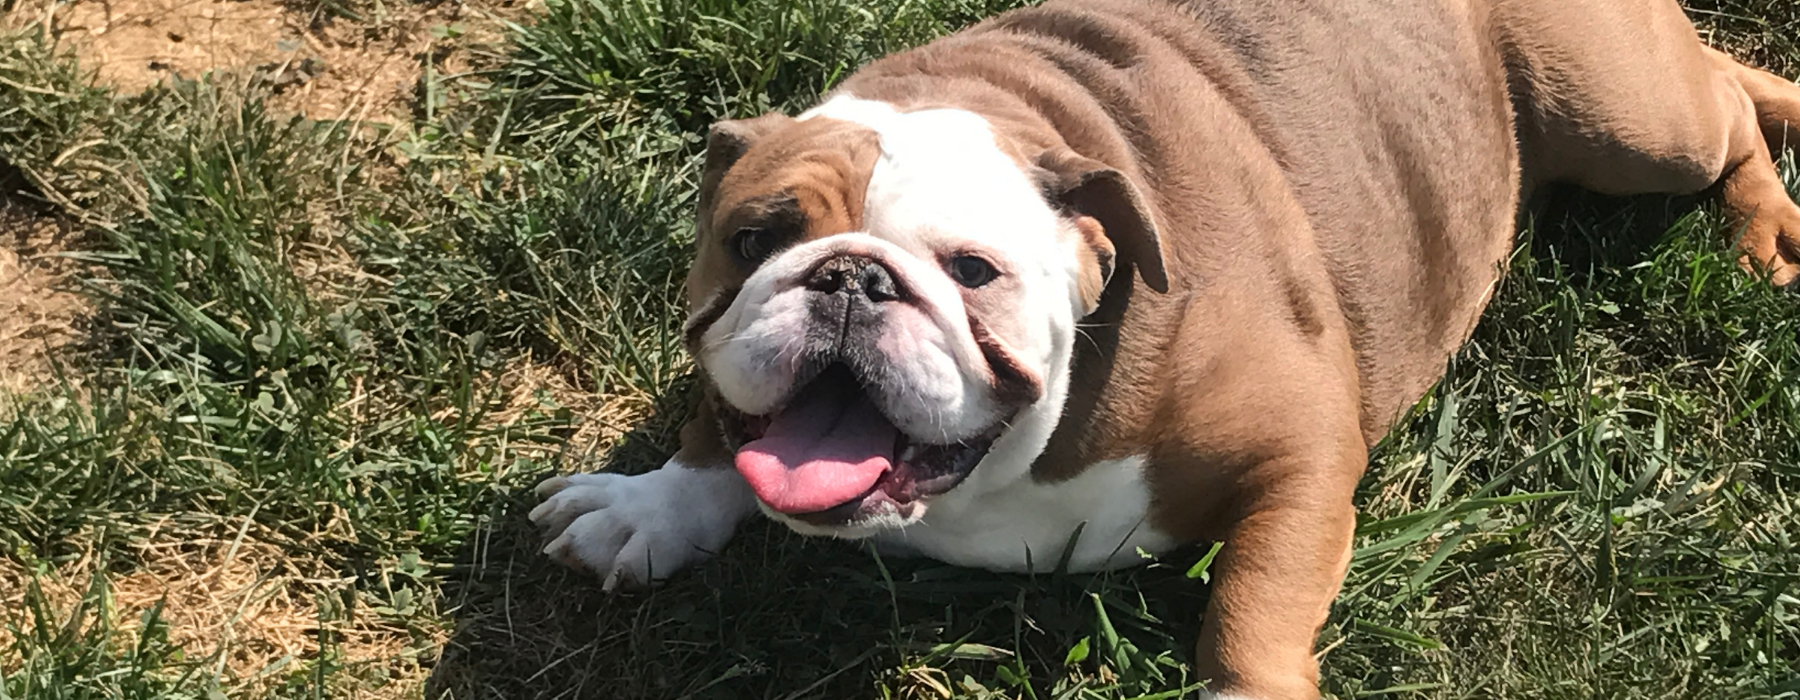 Happy bulldog laying on grass.